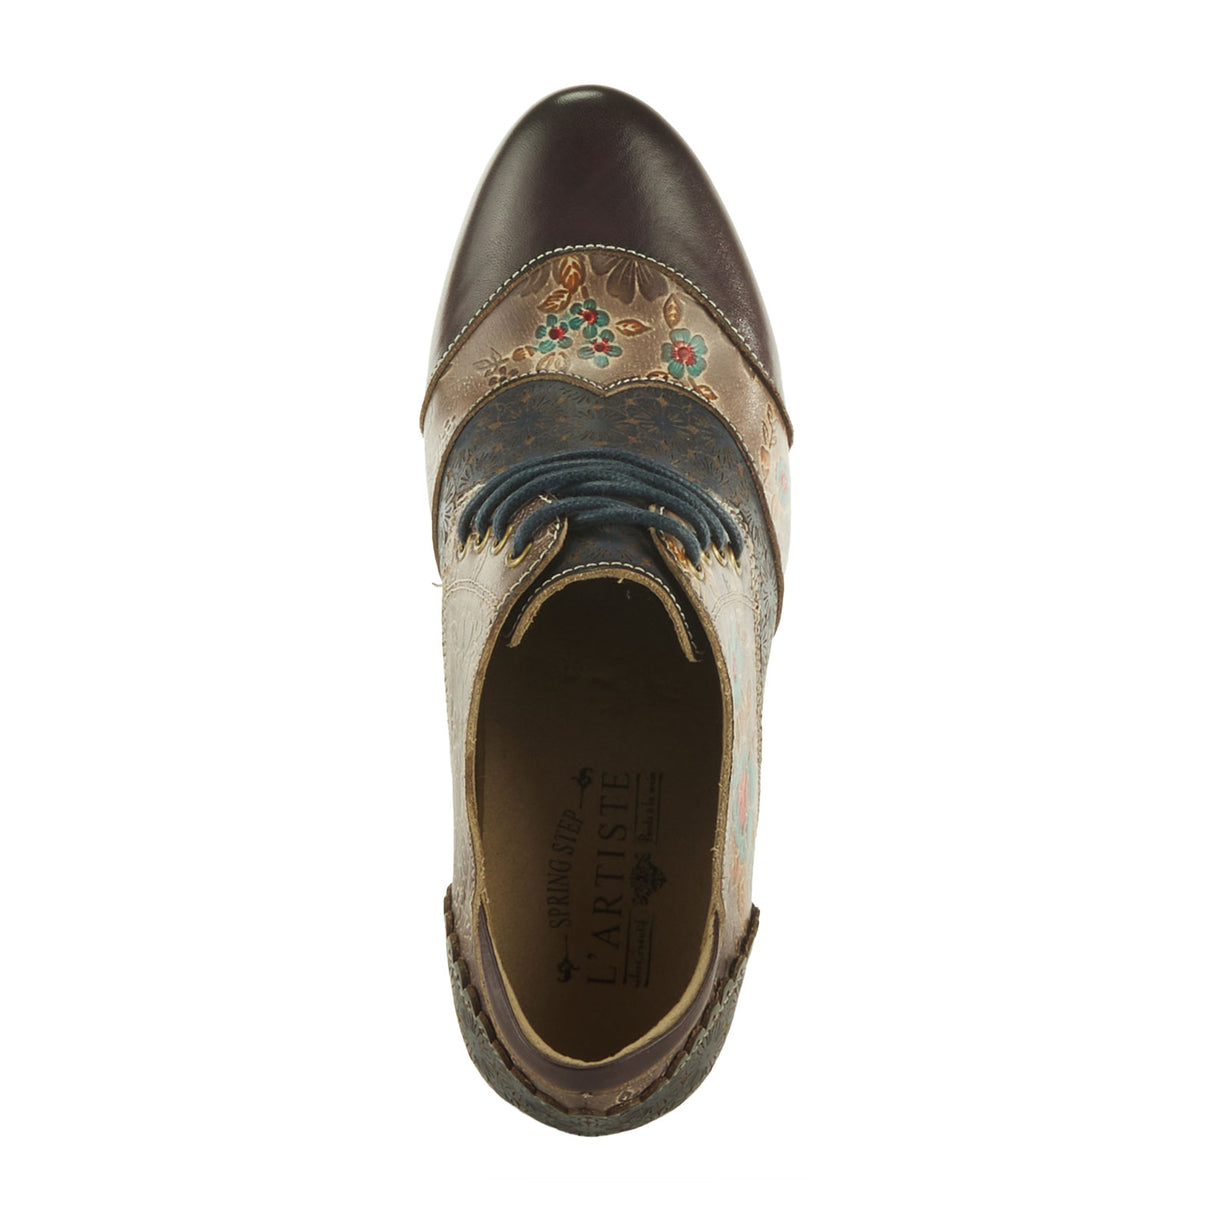 L'Artiste Adelvice-Fleur Ankle Bootie (Women) - Dark Plum Boots - Fashion - Ankle Boot - The Heel Shoe Fitters